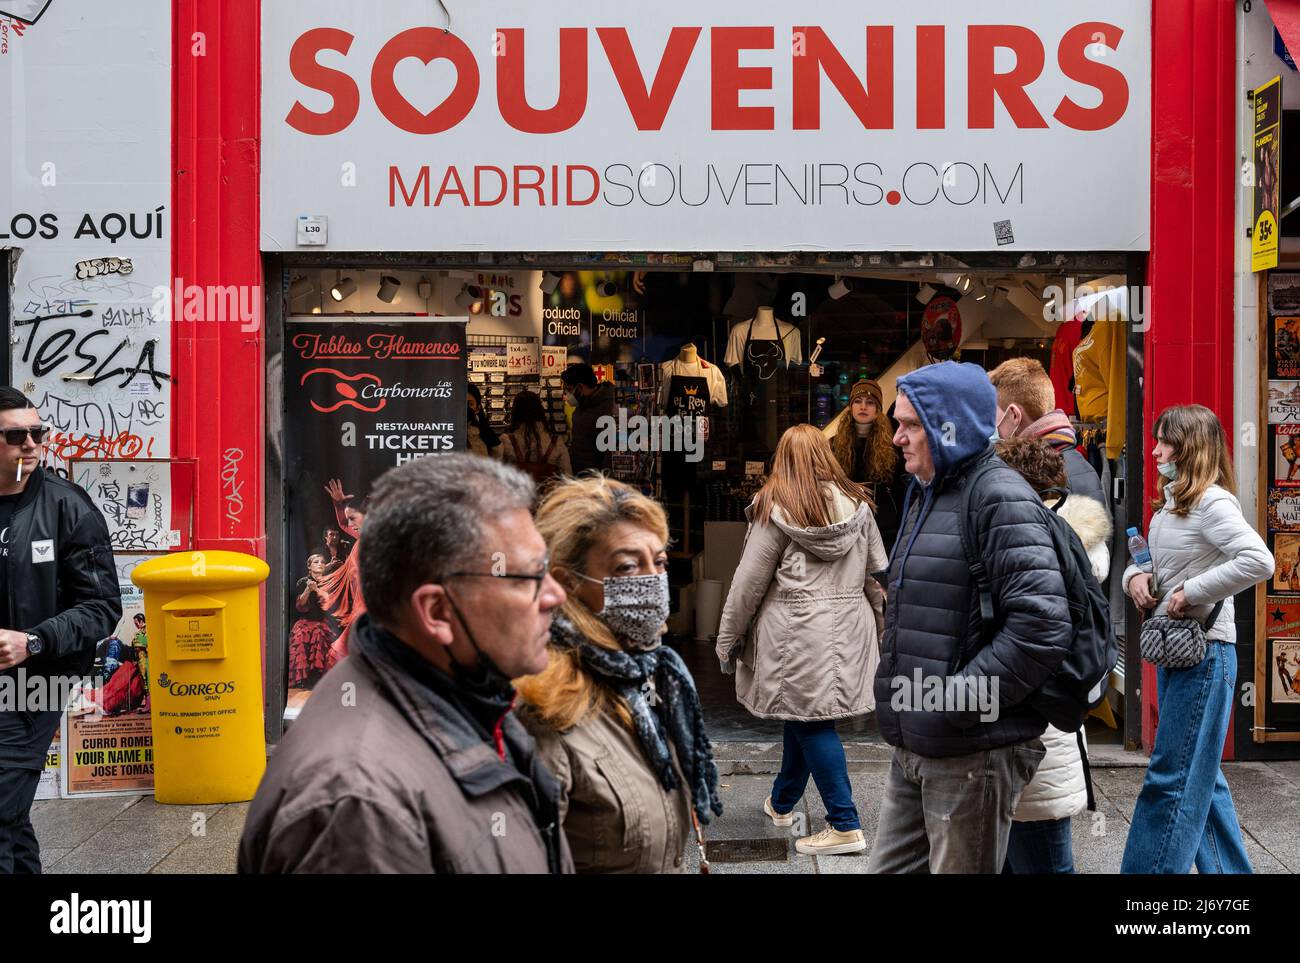 SOUVENIRS MADRID ESPAÑA Fotografía de stock - Alamy